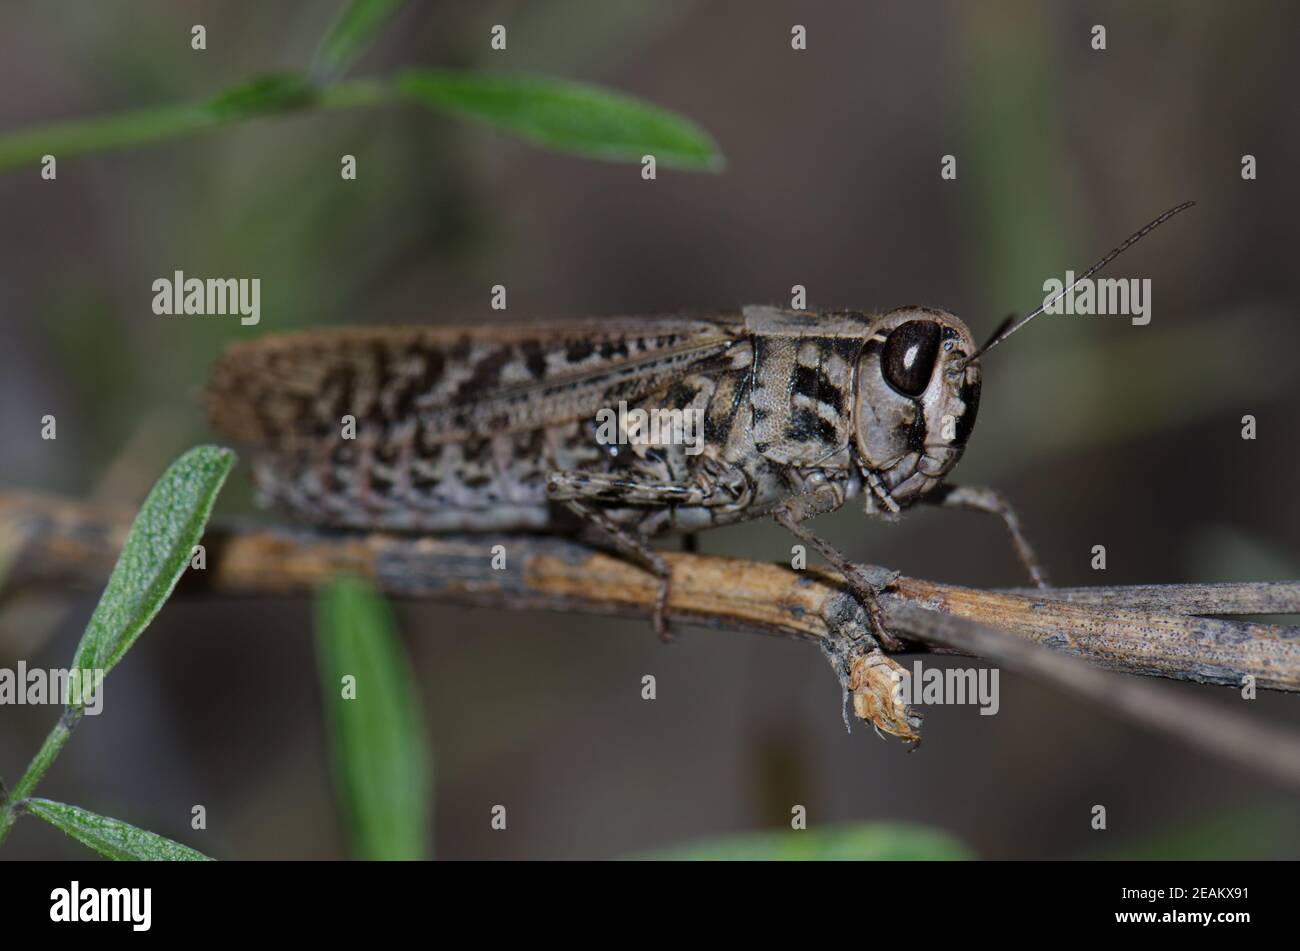 Canarian pincer grasshopper Calliptamus plebeius on a branch. Stock Photo